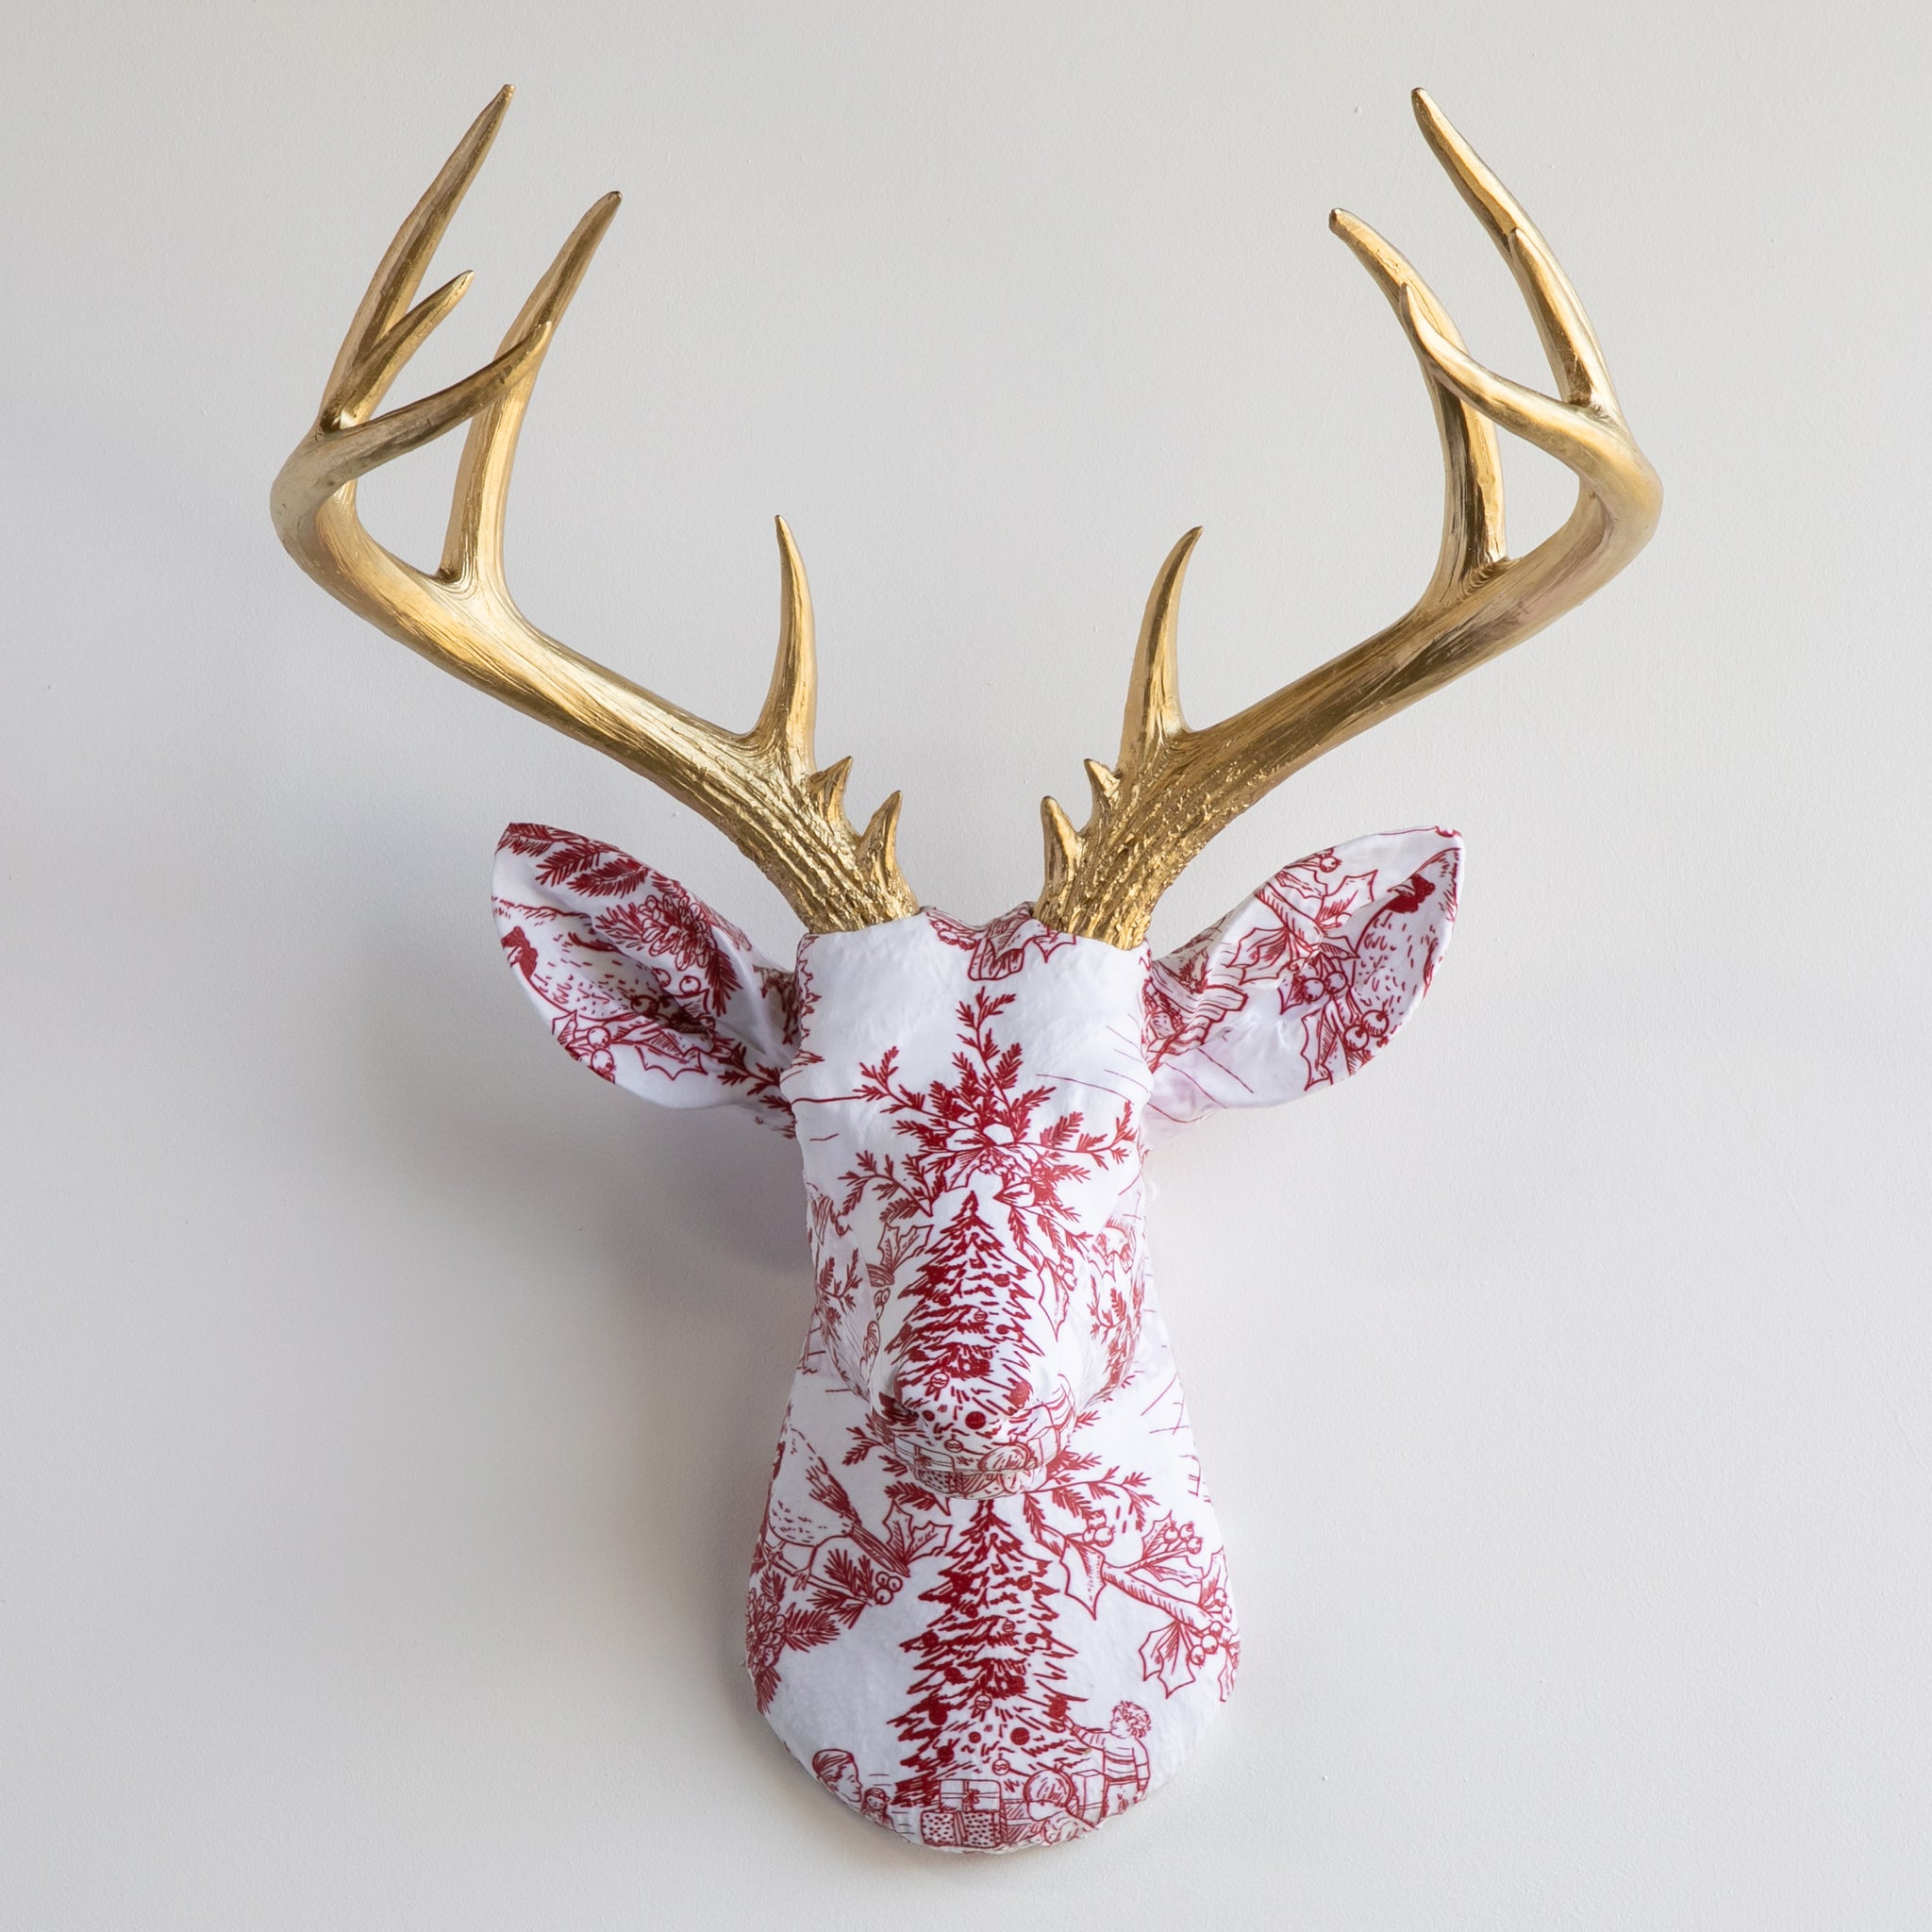 Fabric Deer Head - Christmas Toile Fabric Deer Head